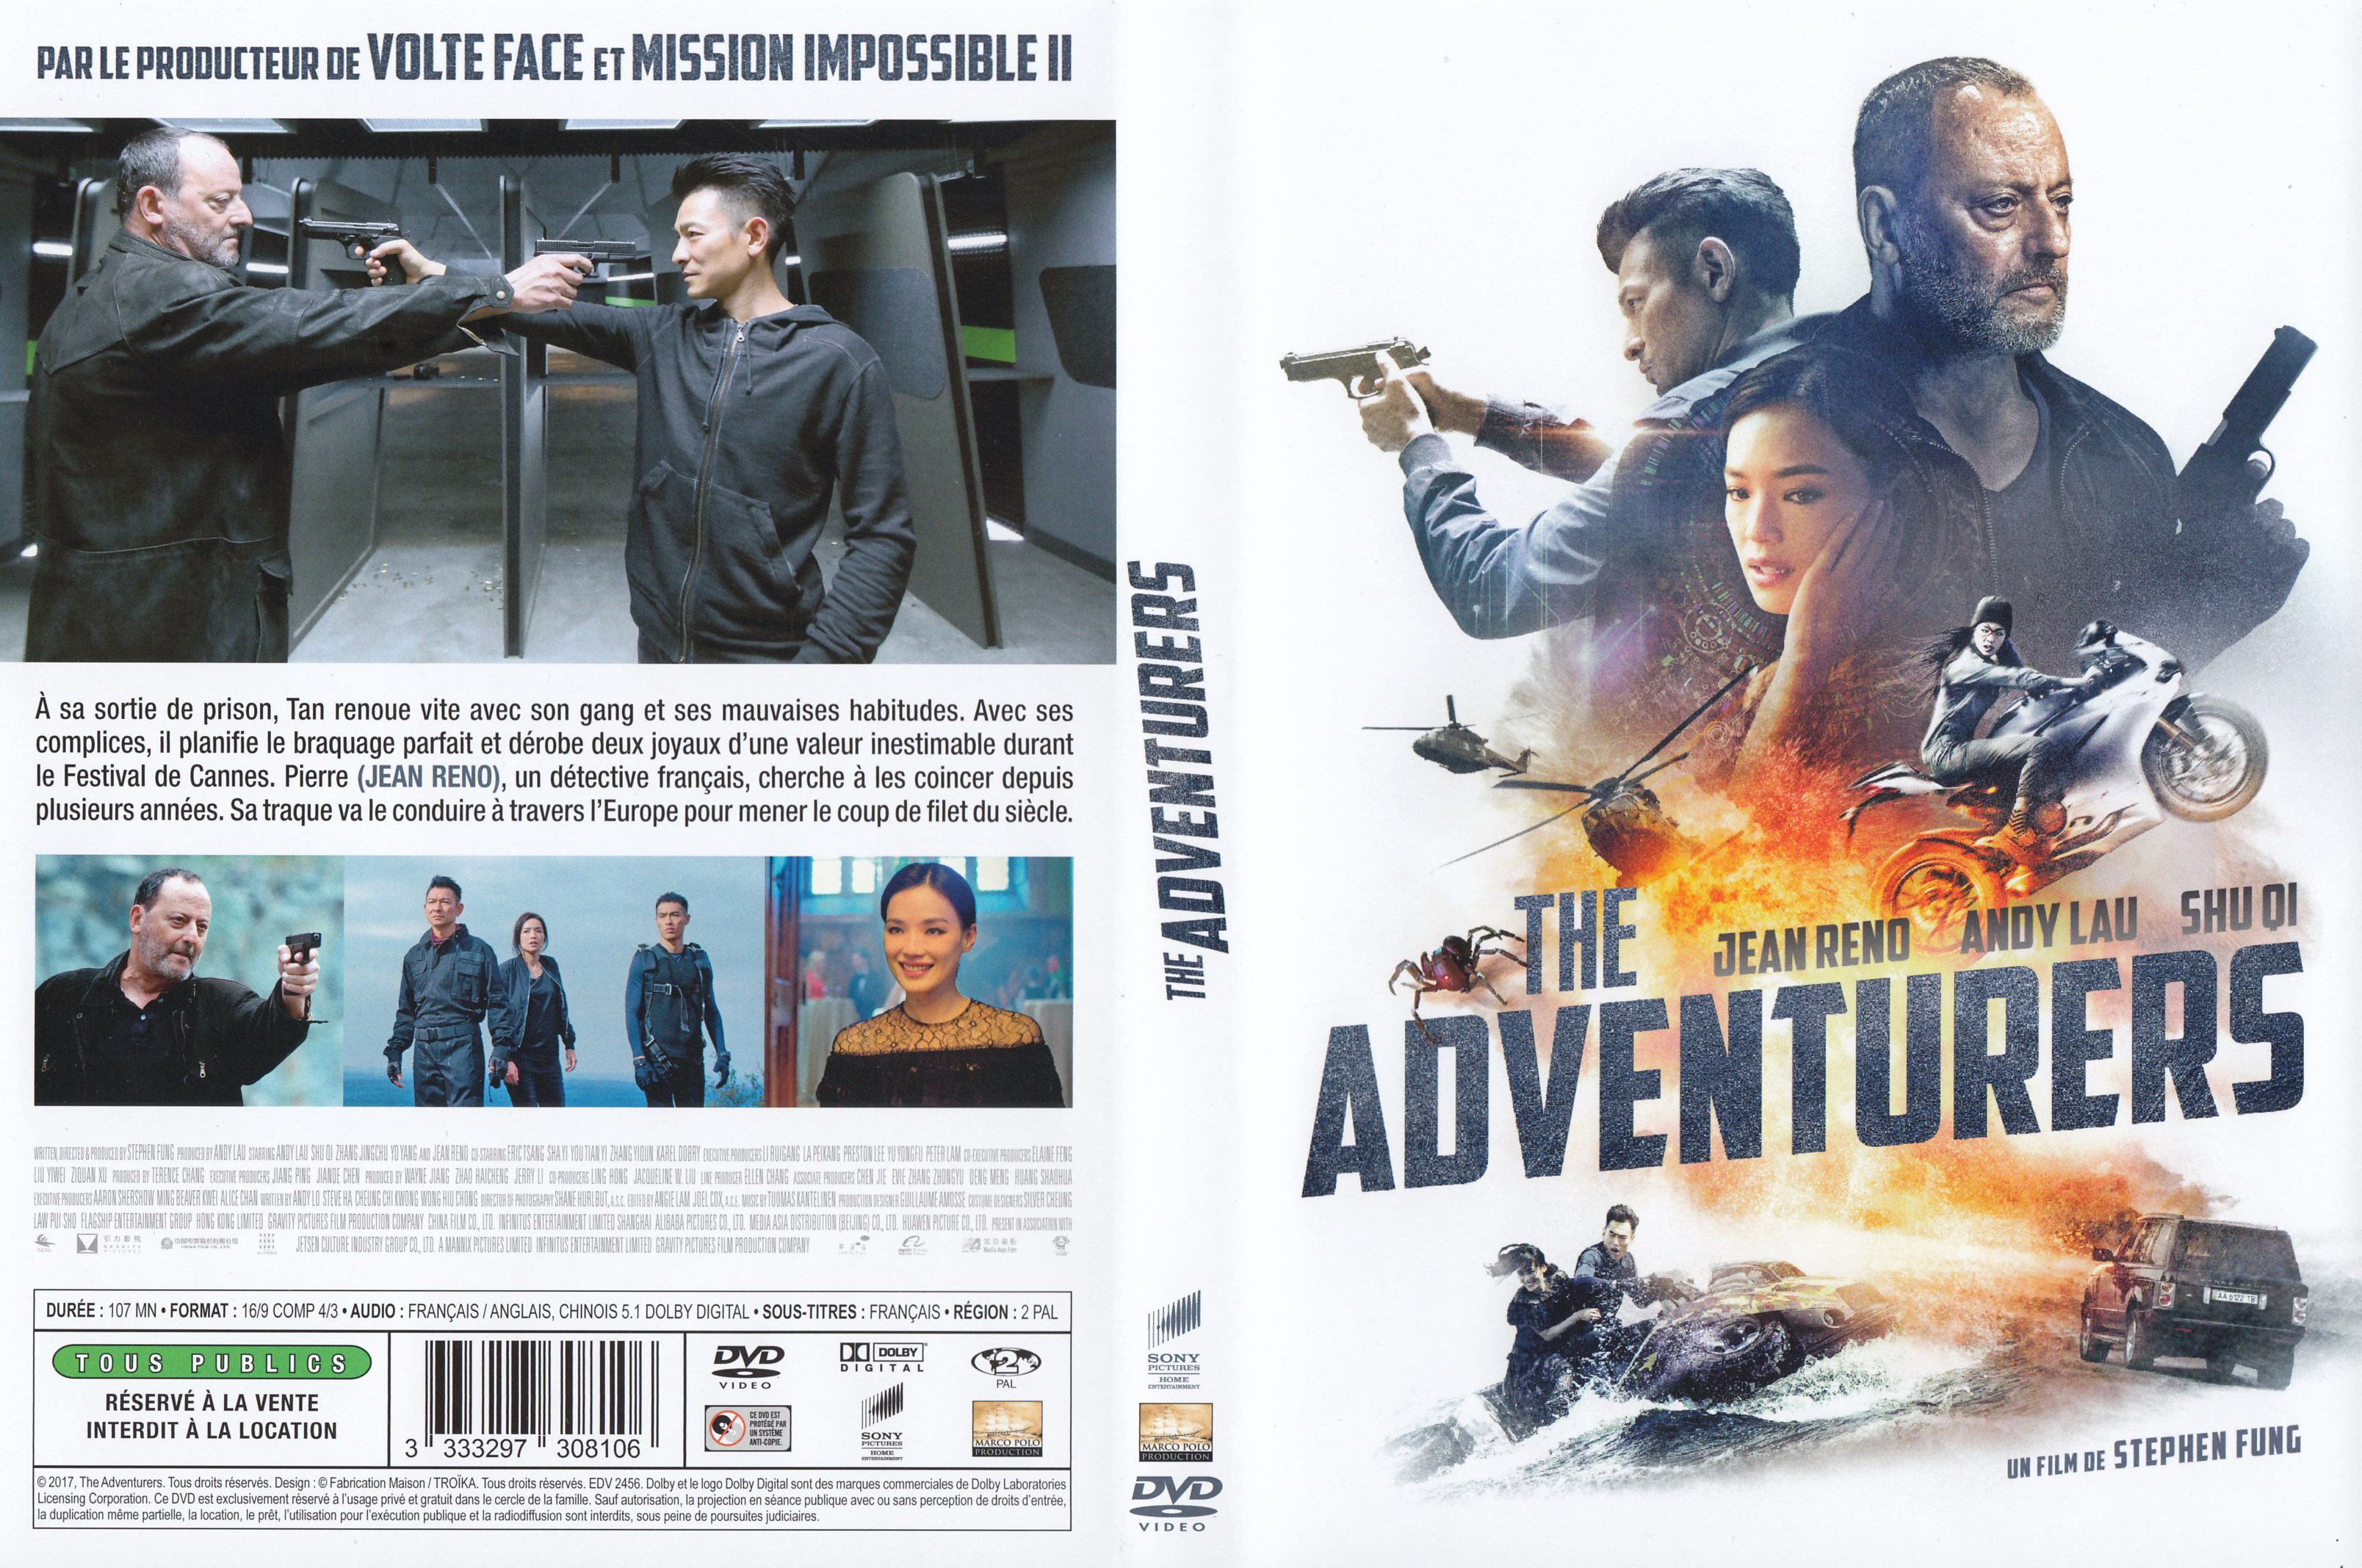 Jaquette DVD The adventurers